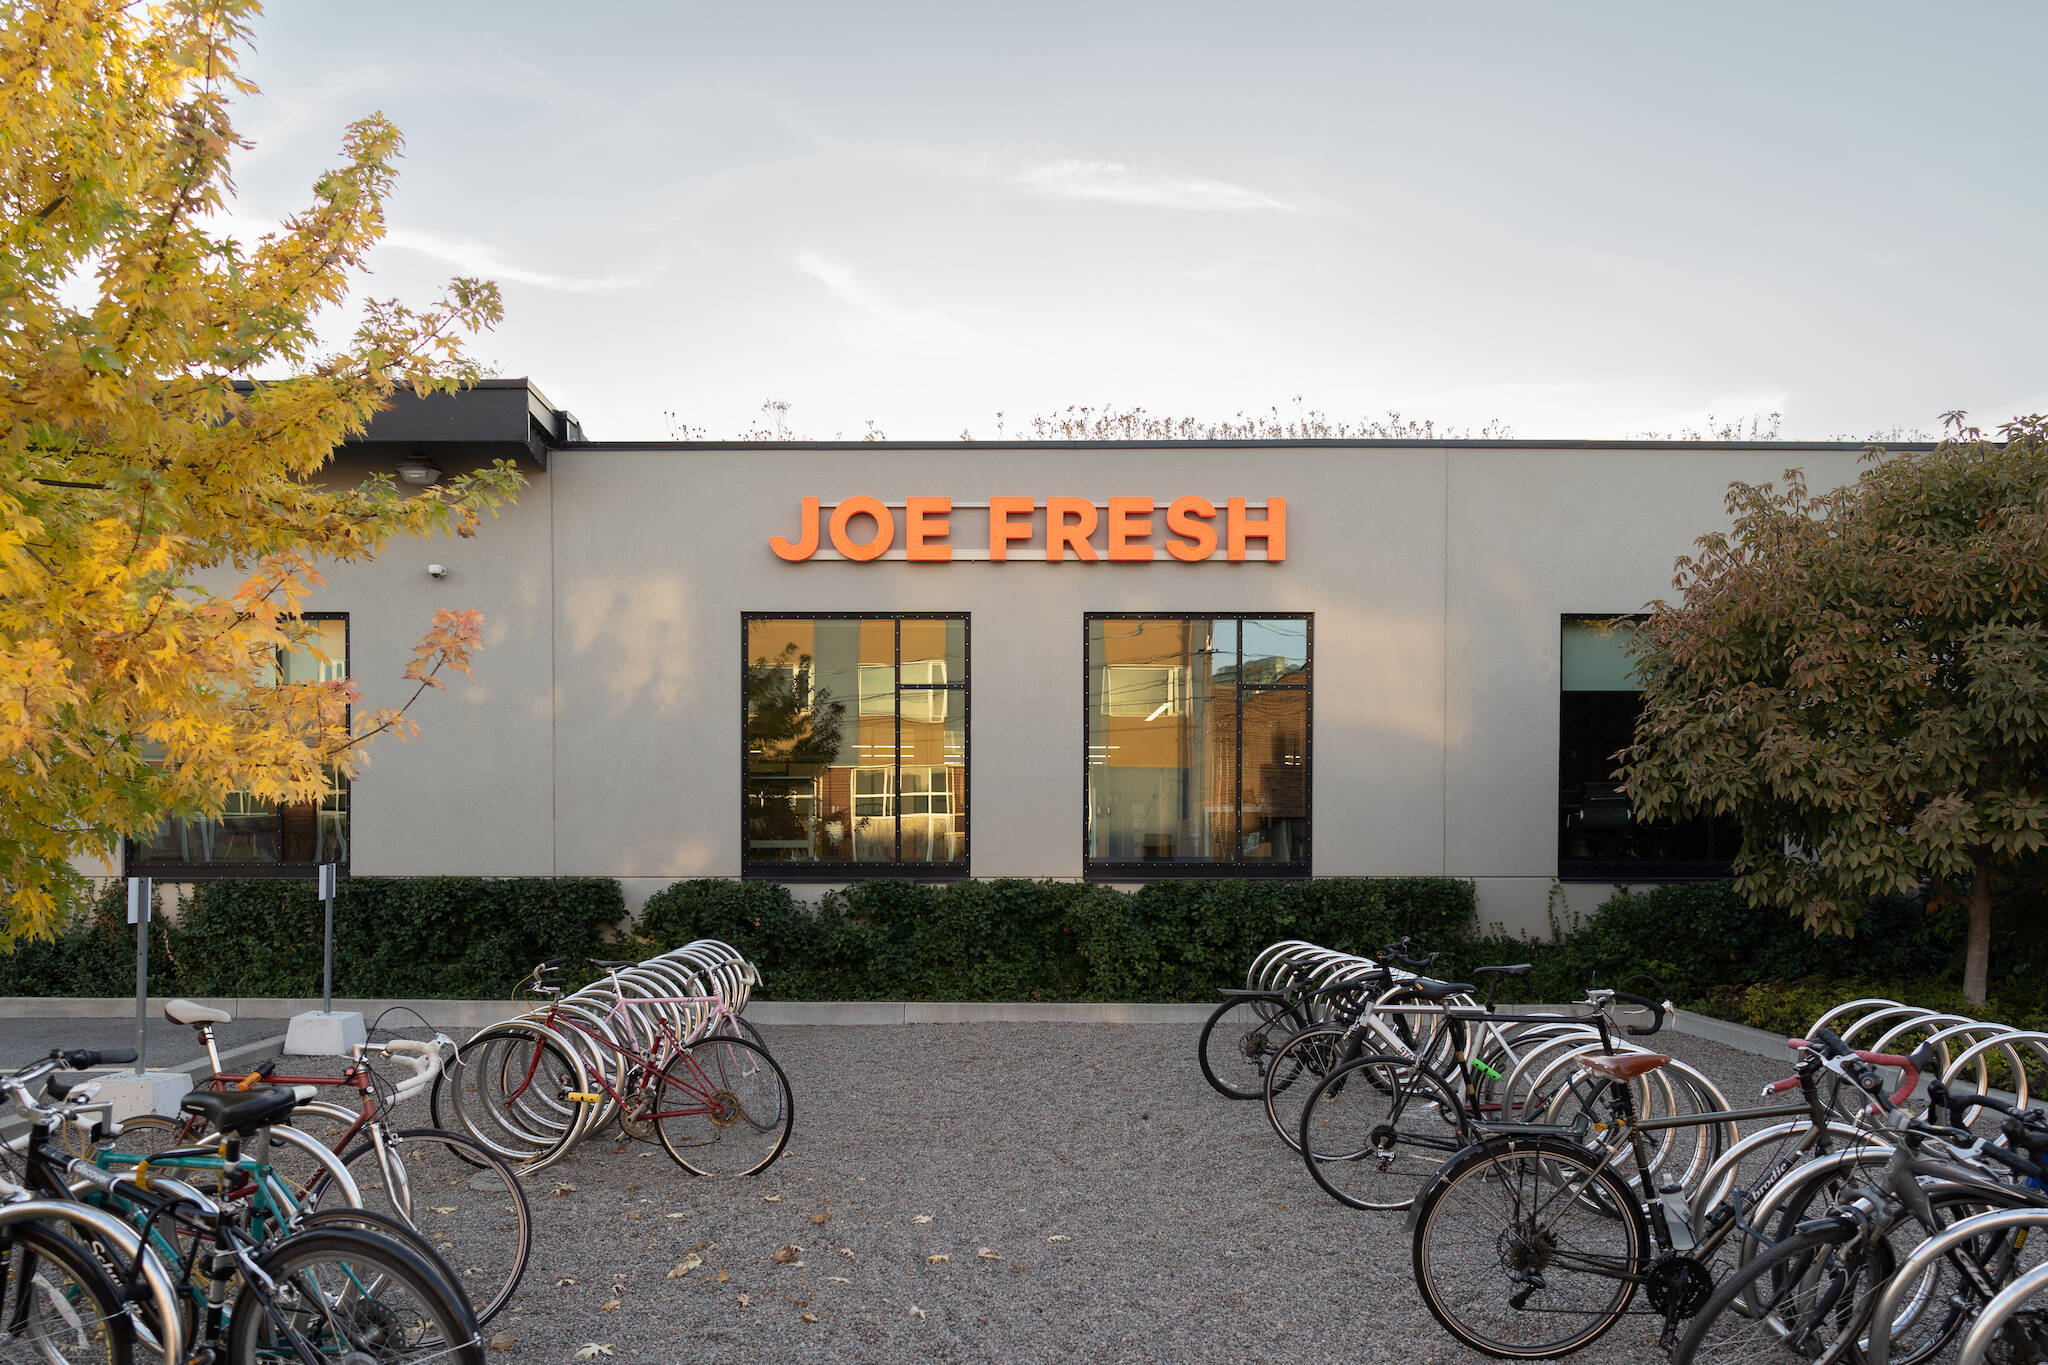 Served Fresh: inside the new Joe Fresh flagship store - Canadian